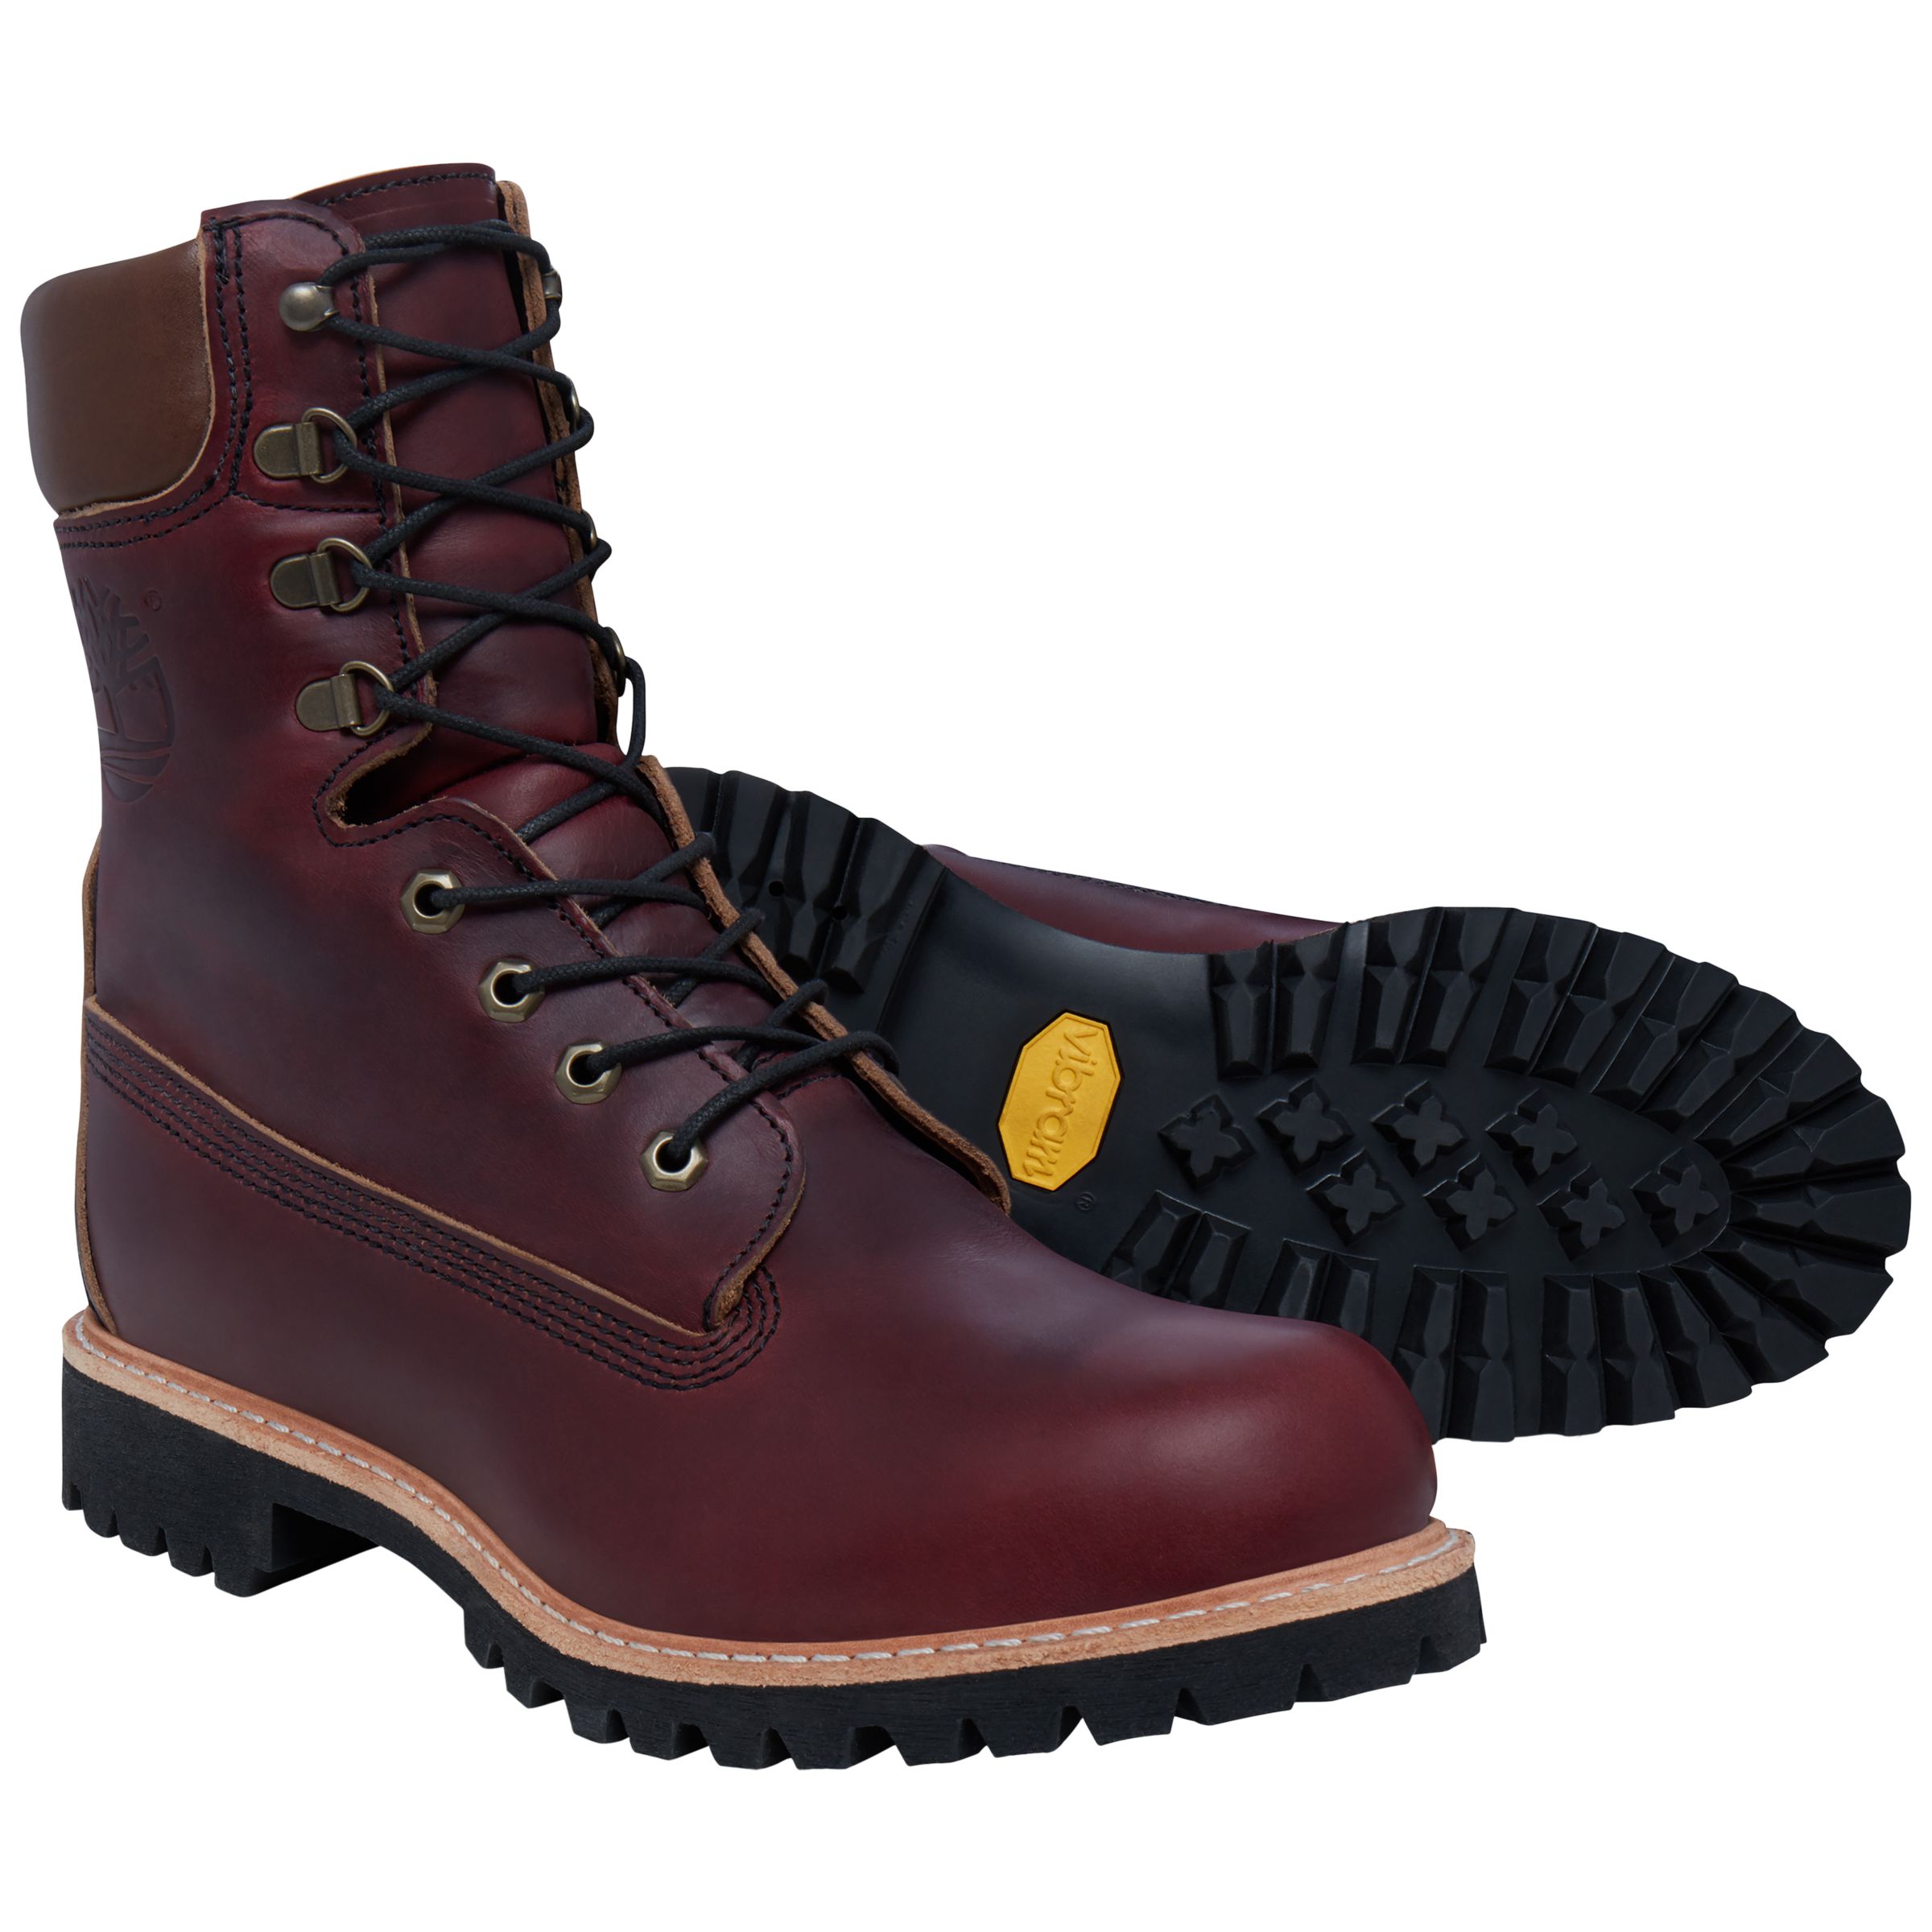 8 inch waterproof boots